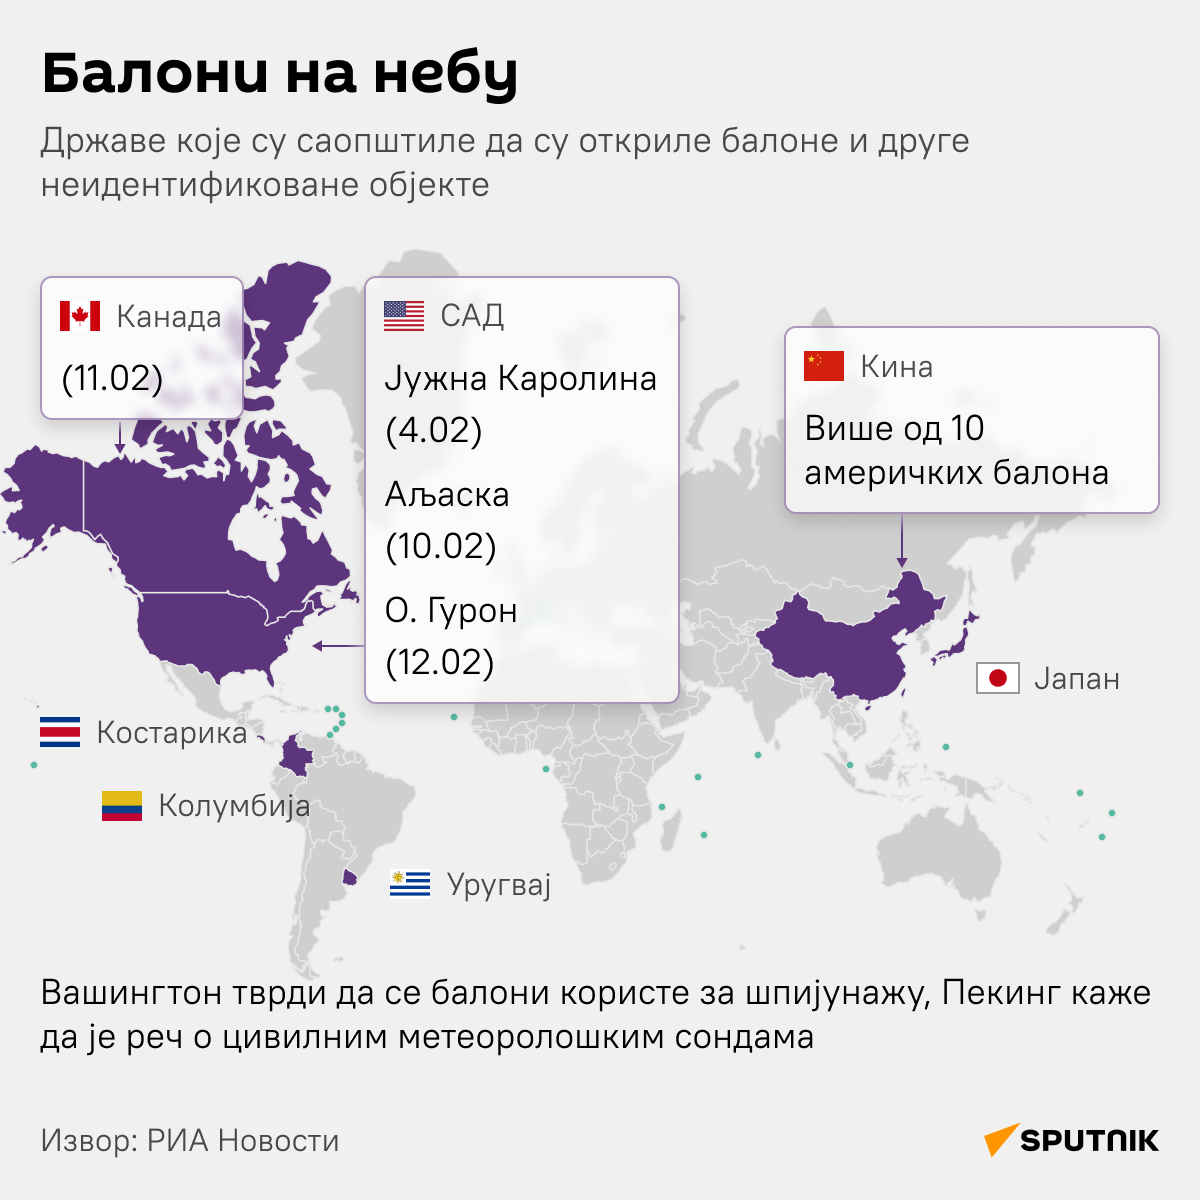 Инфографика Балони на небу  ЋИРИЛИЦА деск - Sputnik Србија